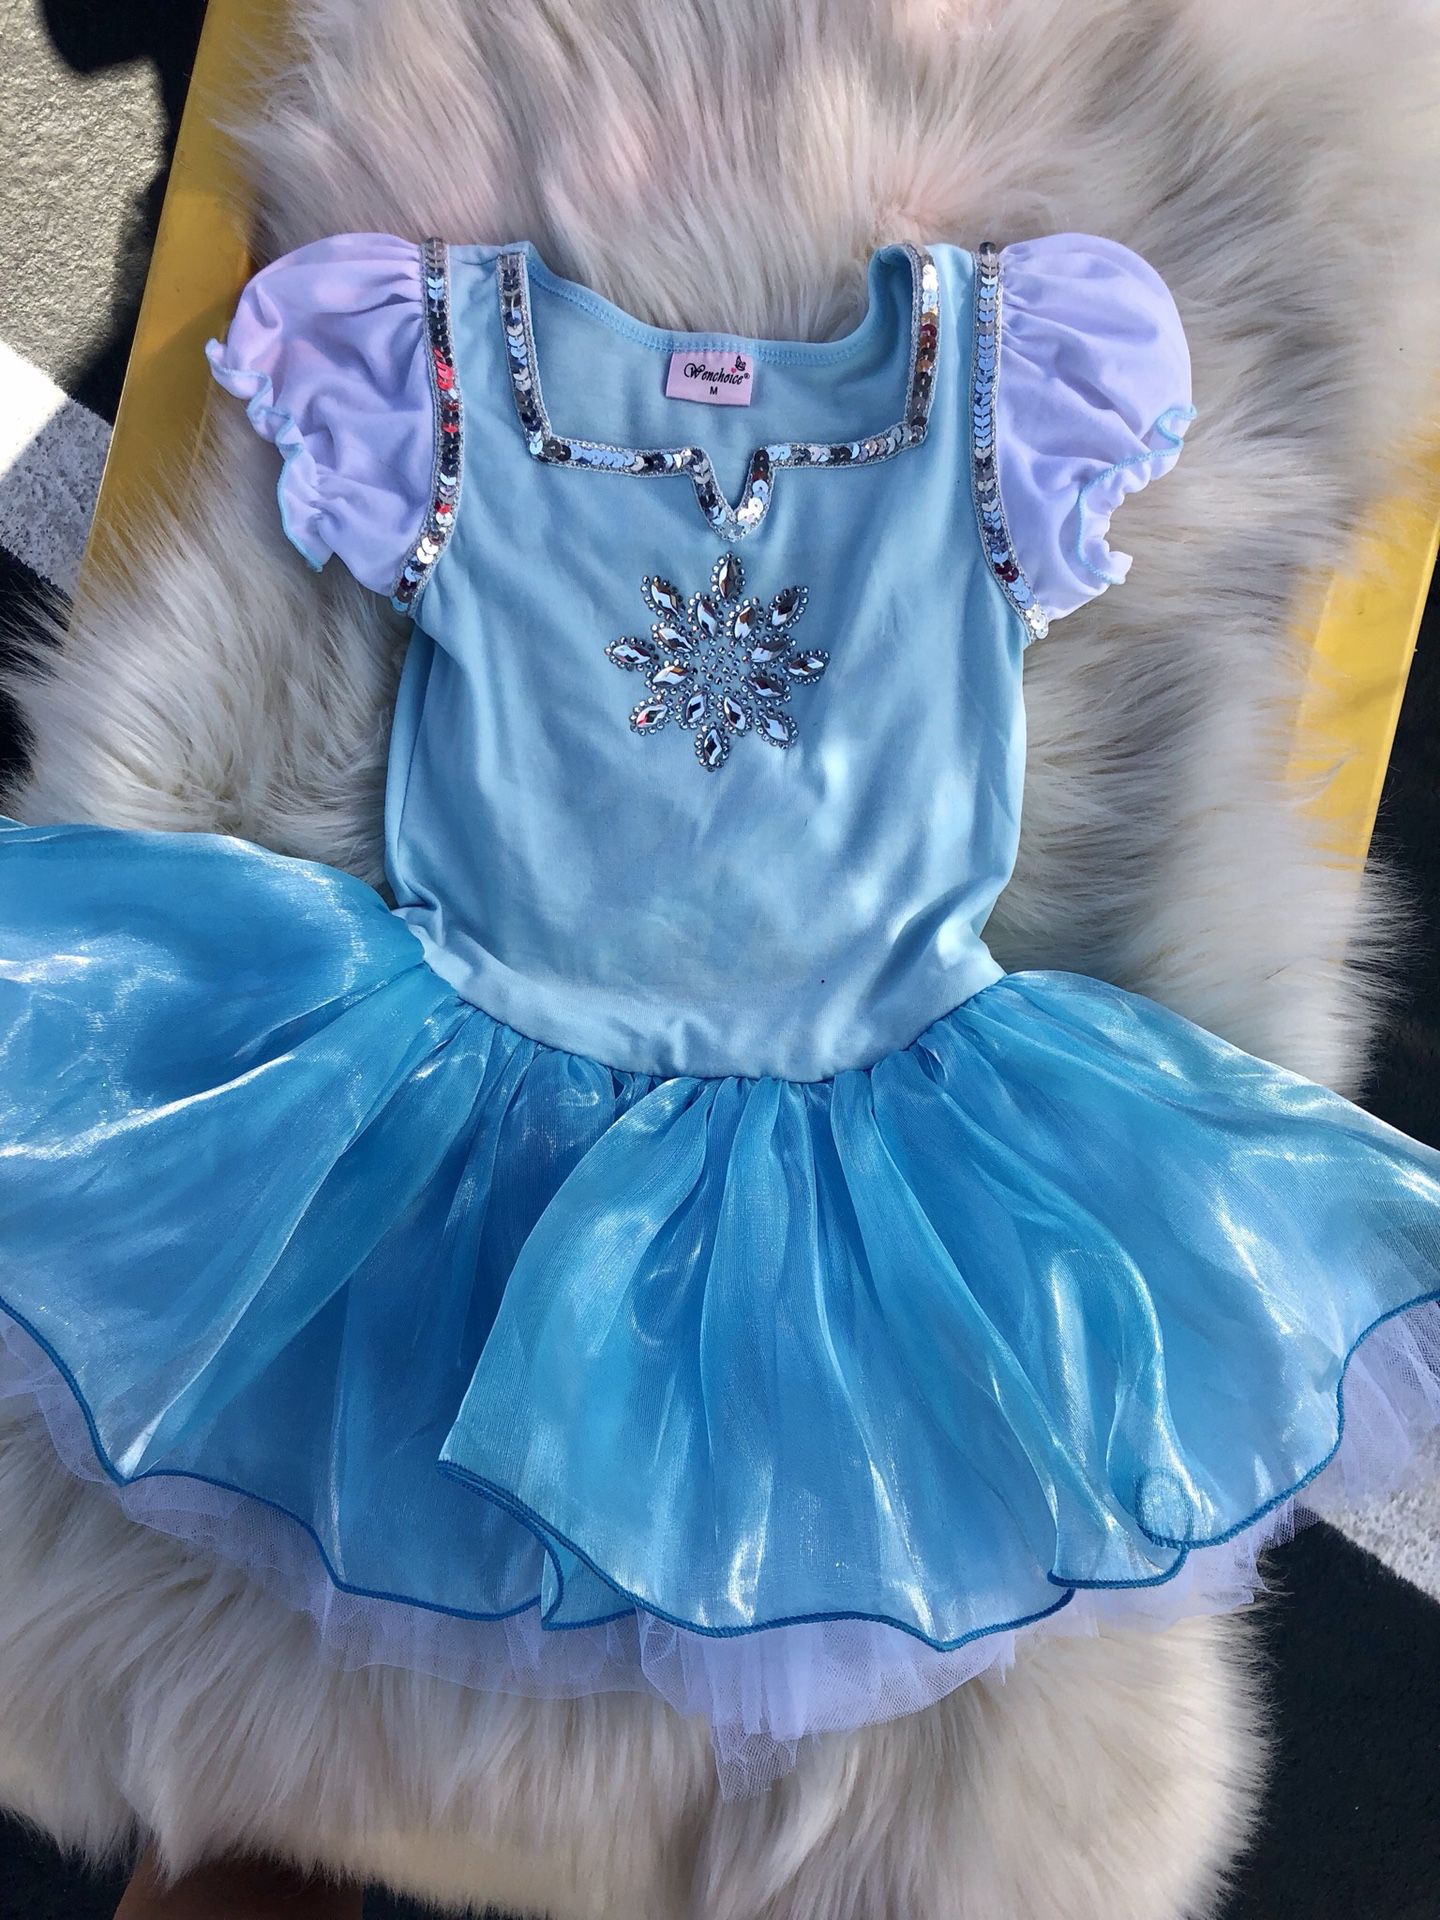 Snowflake Elsa dress tutu leotard